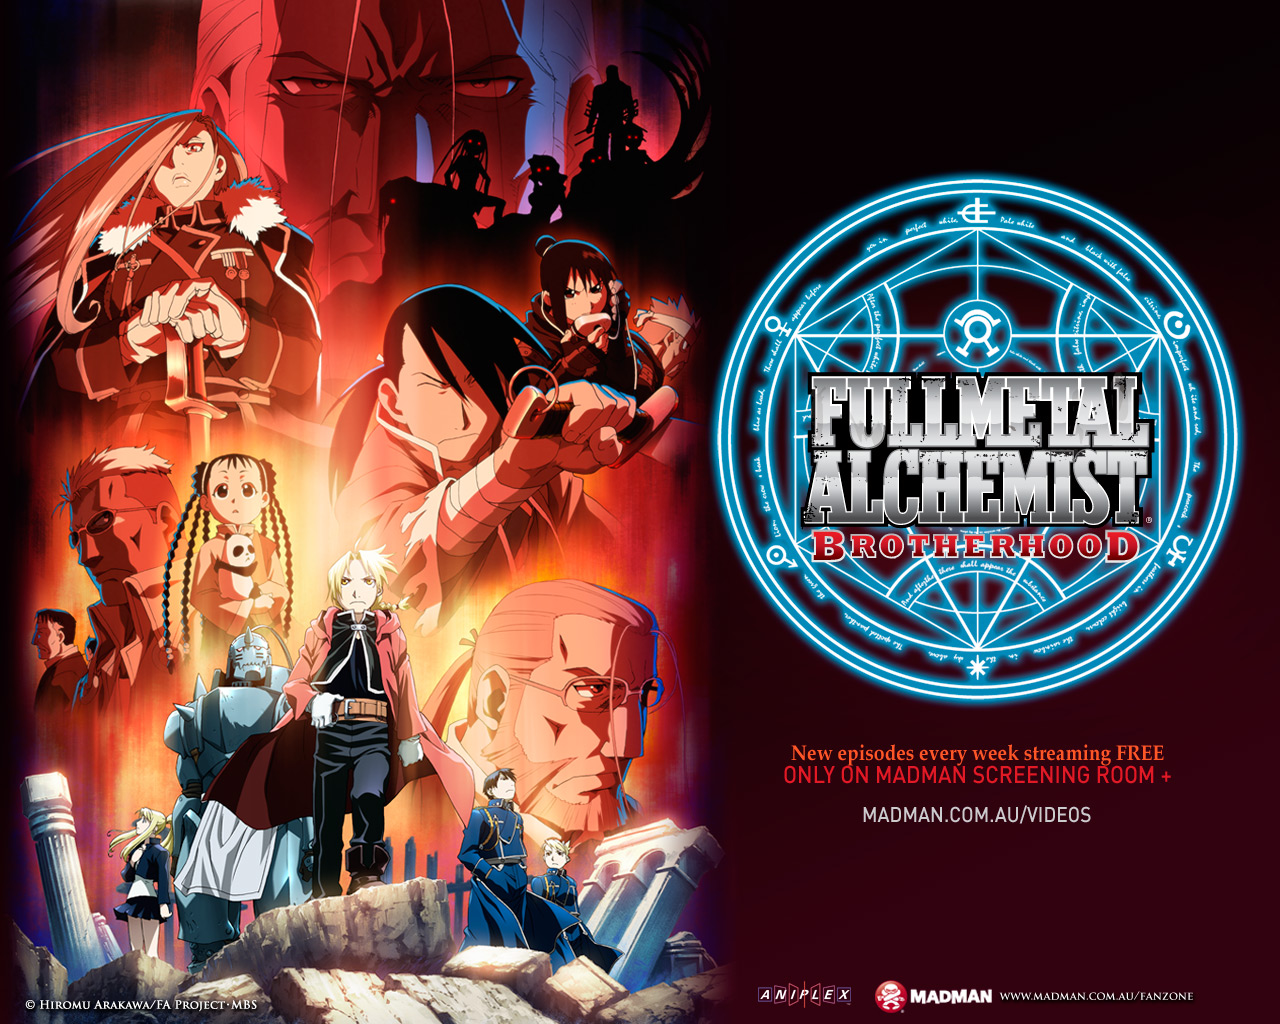 Fullmetal Alchemist vs Fullmetal Alchemist Brotherhood – Objection Network